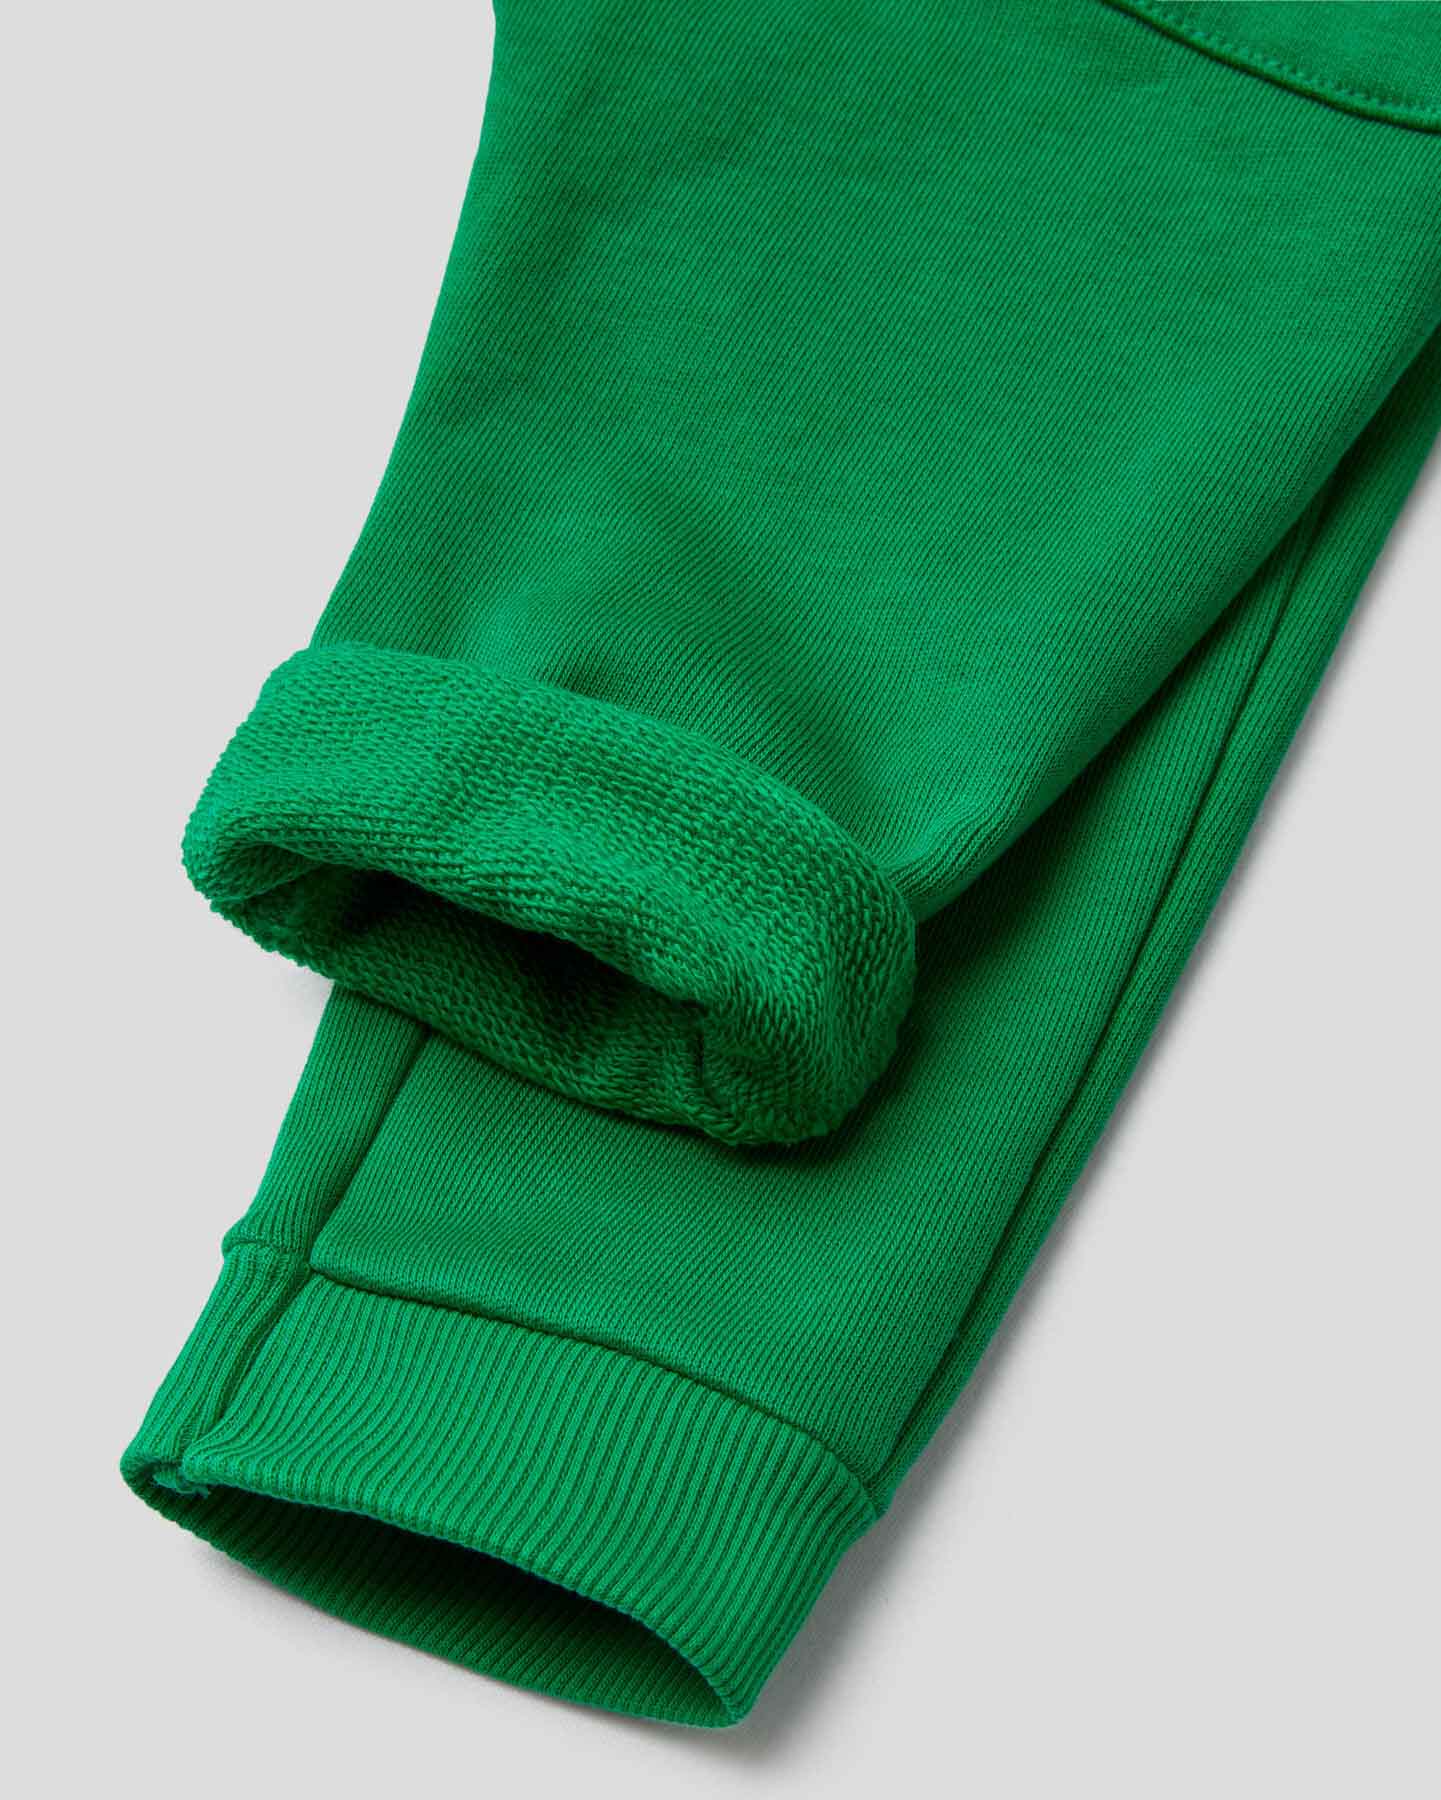 Green Trouser